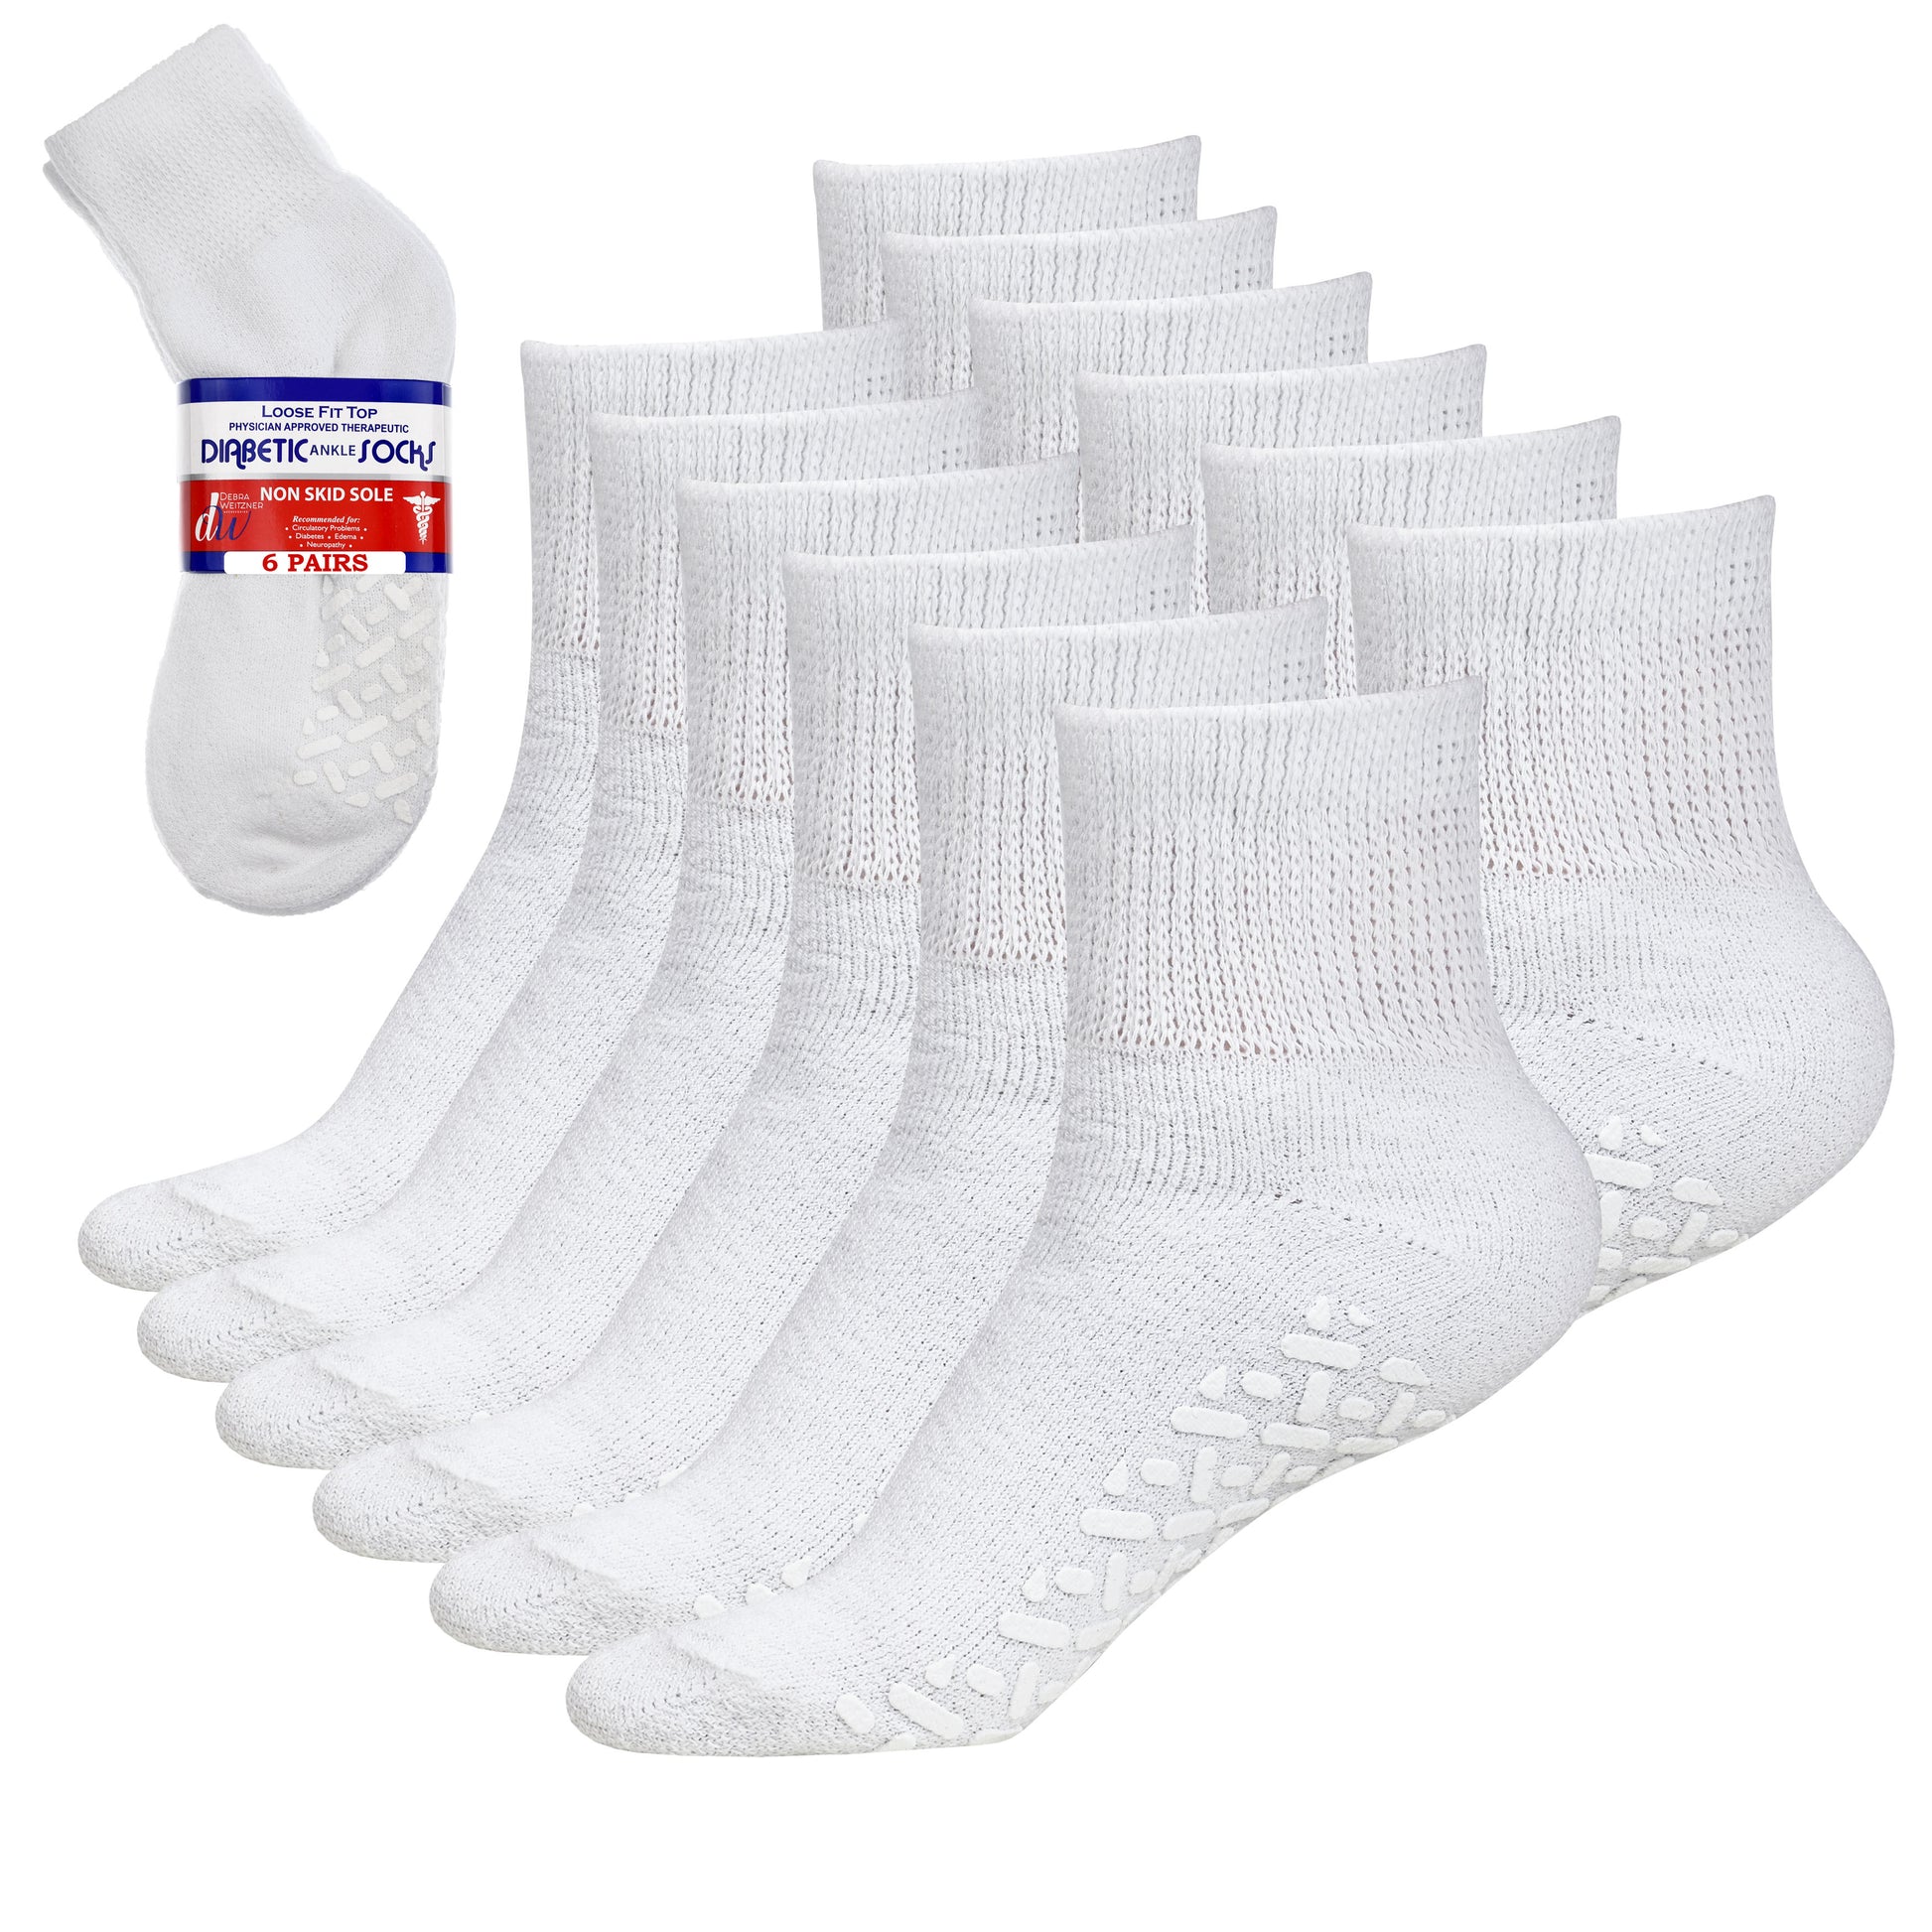 Diabetic Socks with Grips- Non Slip for Men and Women - 6 Pairs – Debra  Weitzner